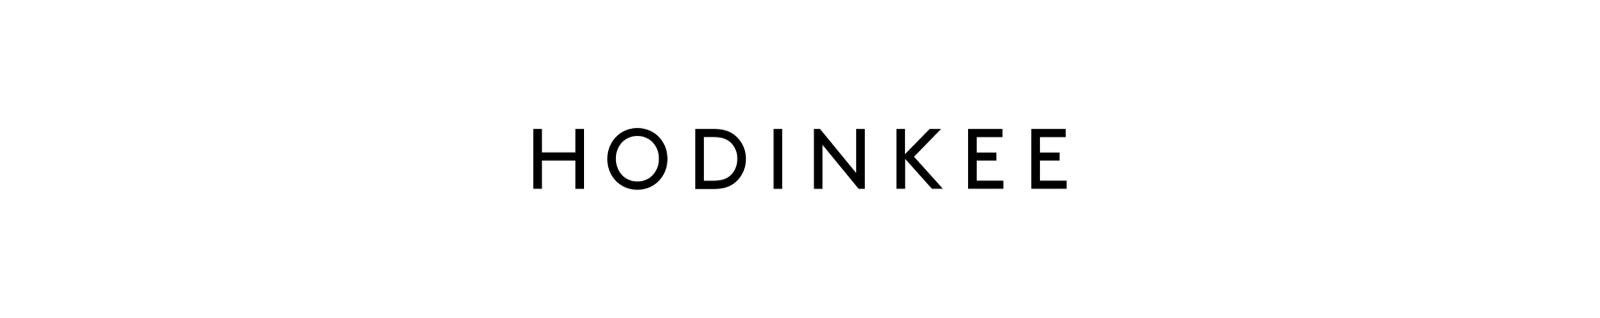 Hodinkee.com